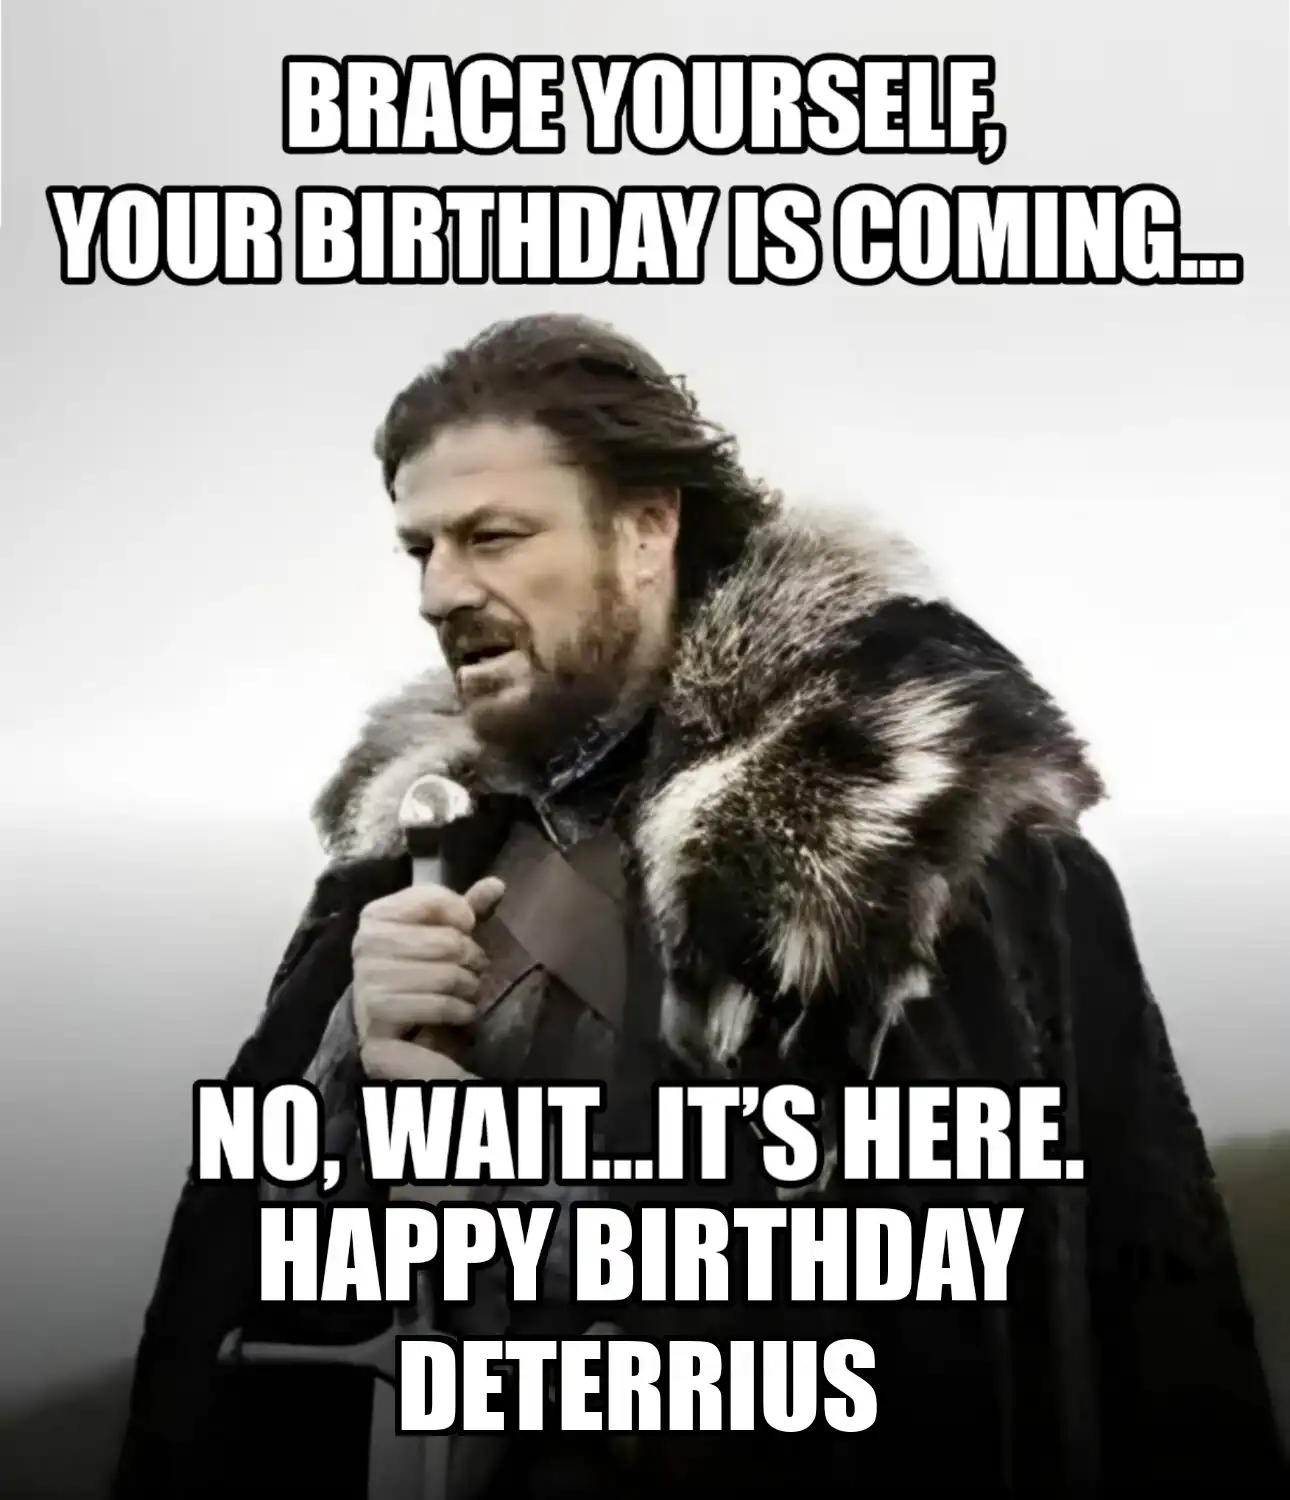 Happy Birthday Deterrius Brace Yourself Your Birthday Is Coming Meme